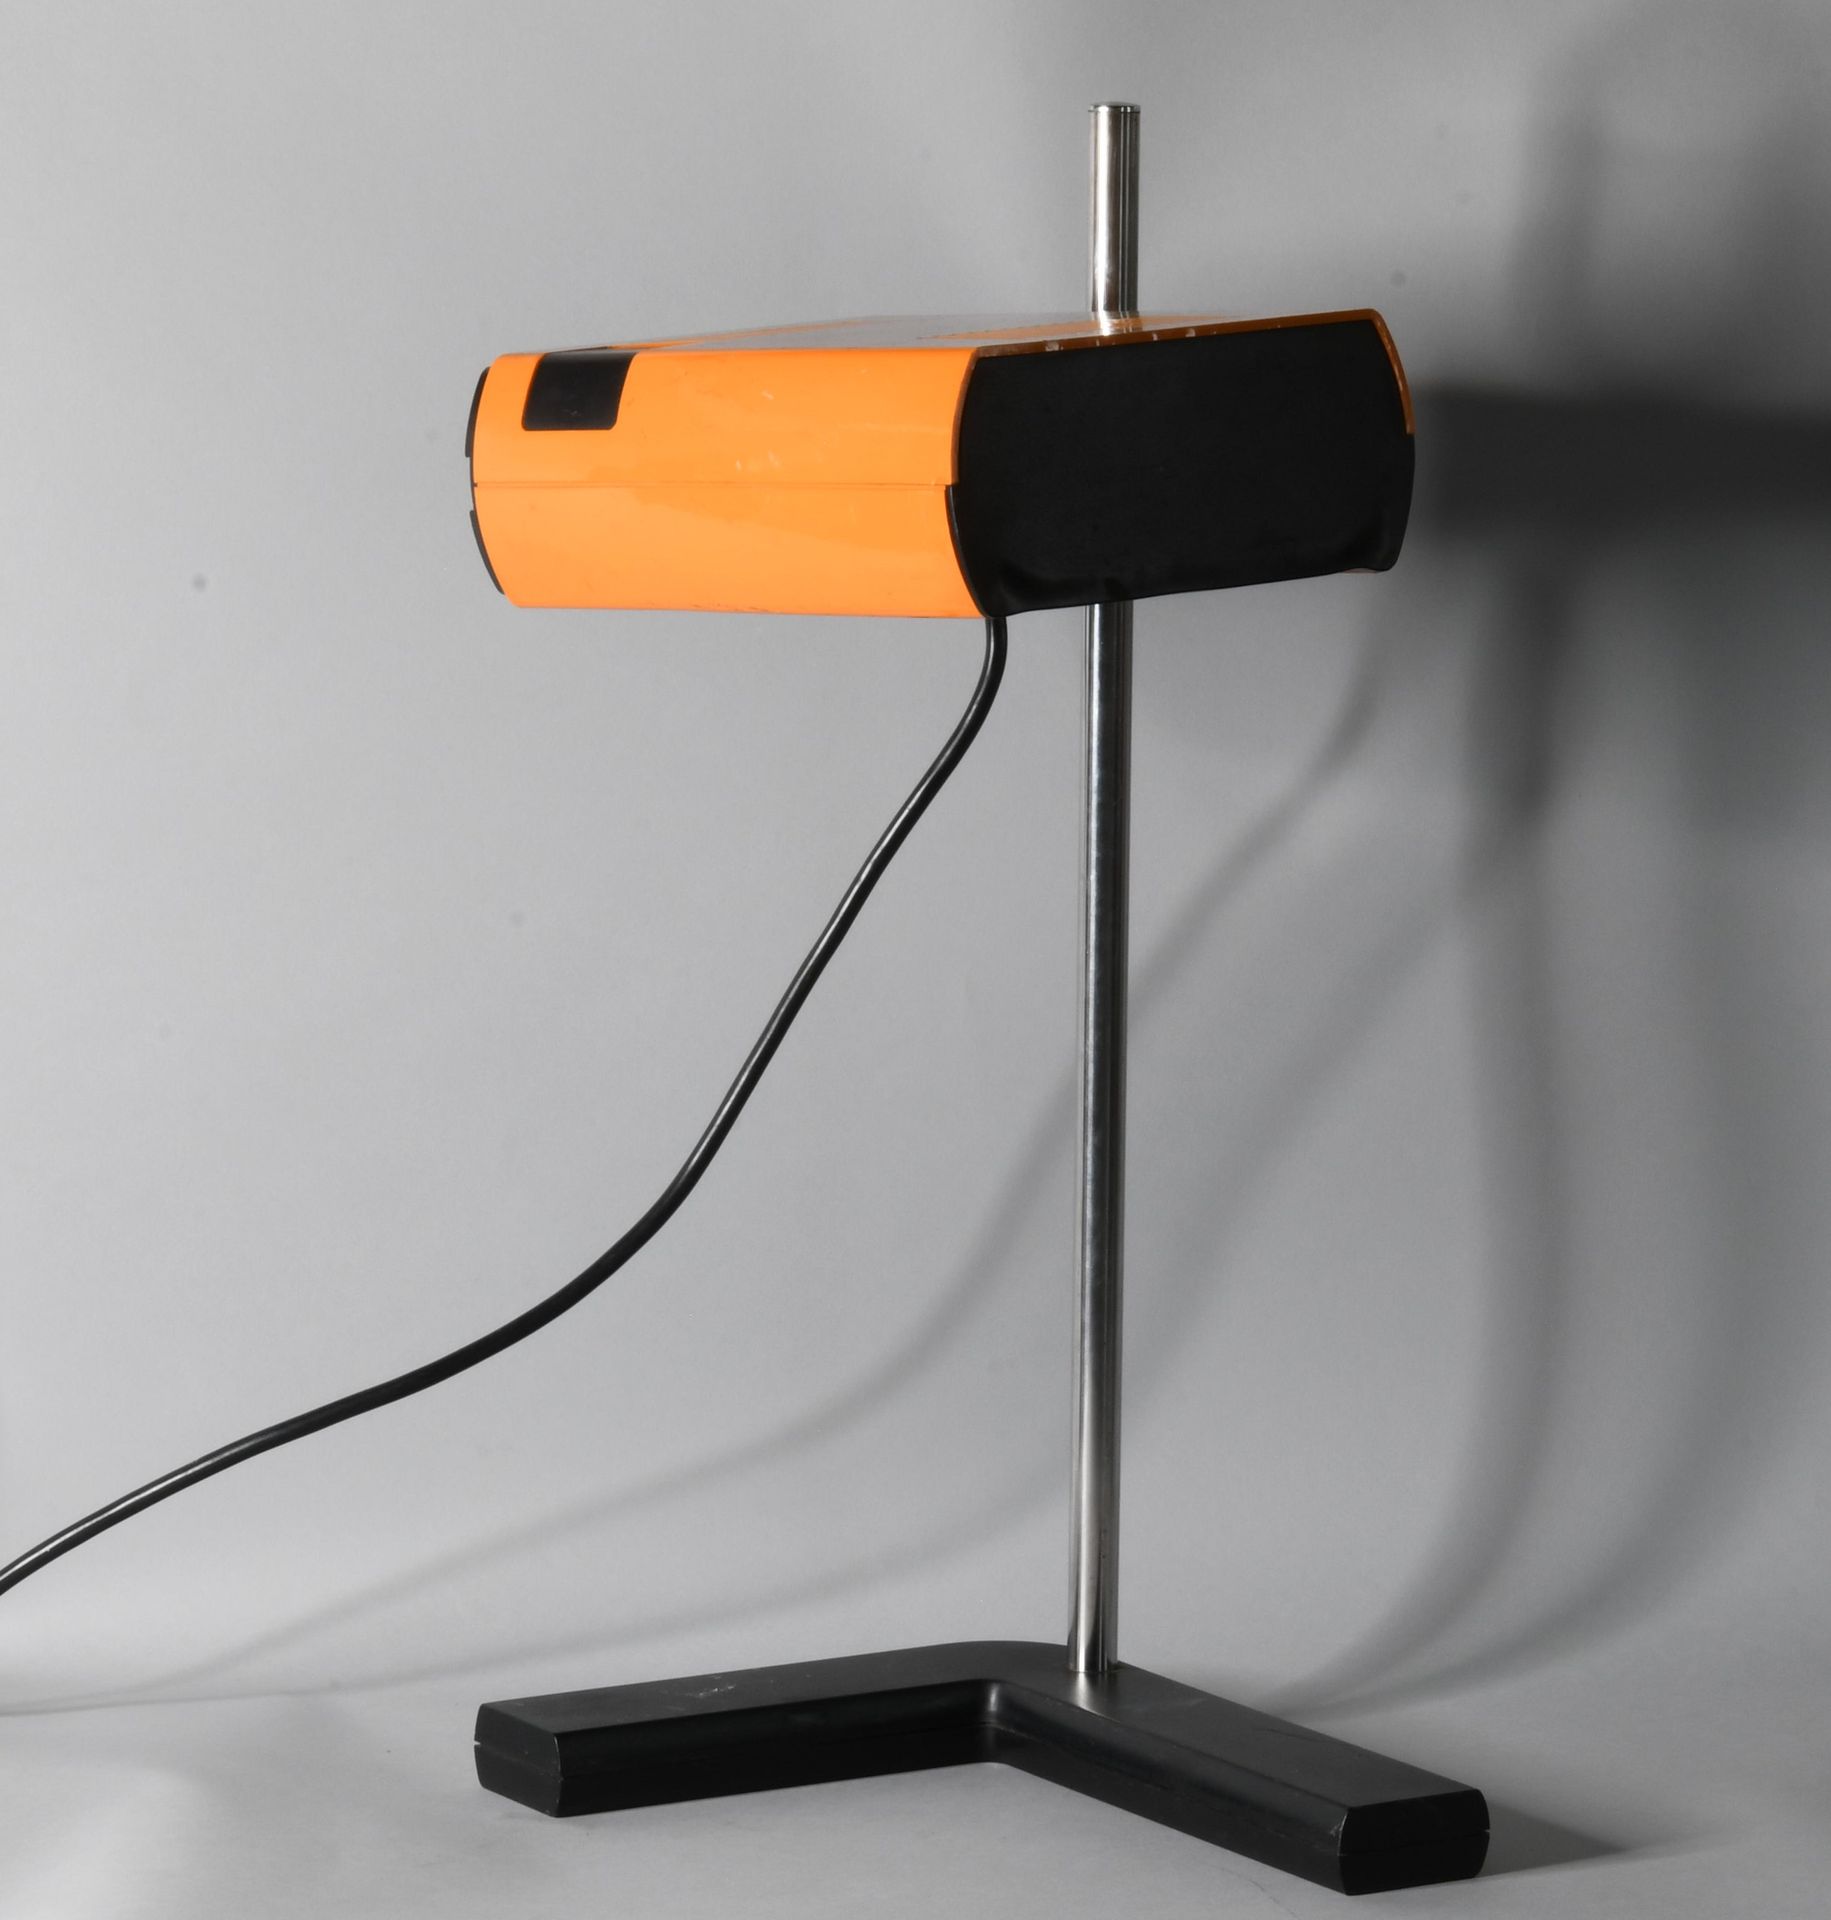 Null 出版商SAMP。台灯模型 "Manade"，橙色，金属和塑料。

底座下有签名

高：52厘米

(划痕)